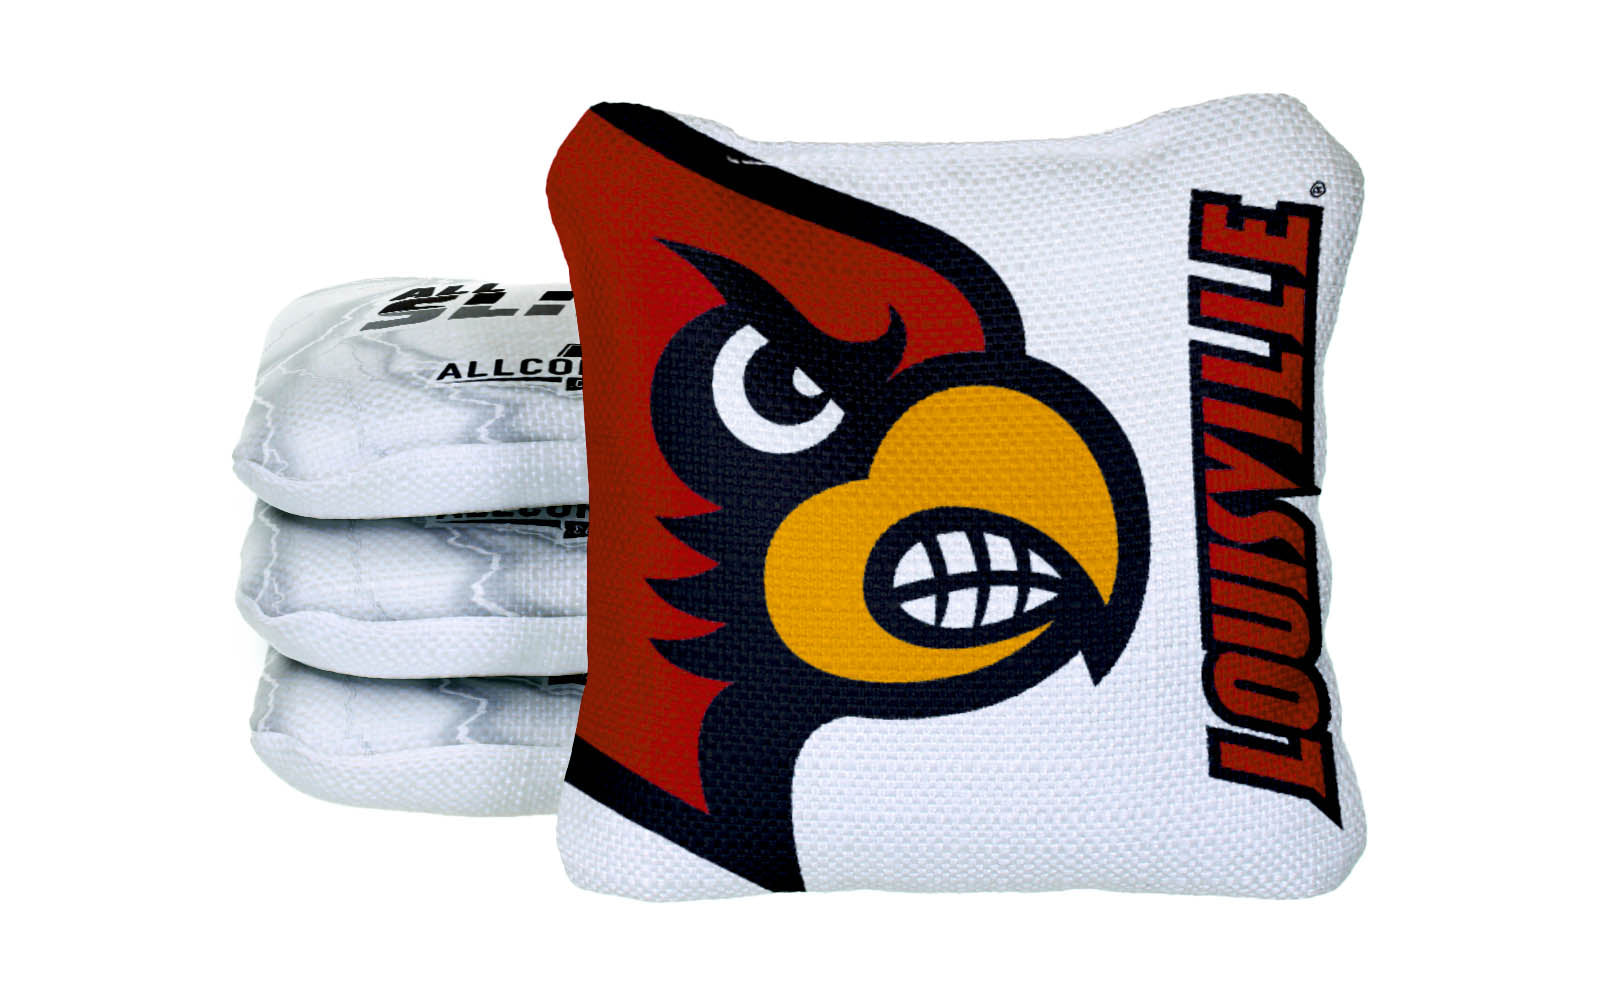 Officially Licensed Collegiate Cornhole Bags - All-Slide 2.0 - Set of 4 - University of Louisville